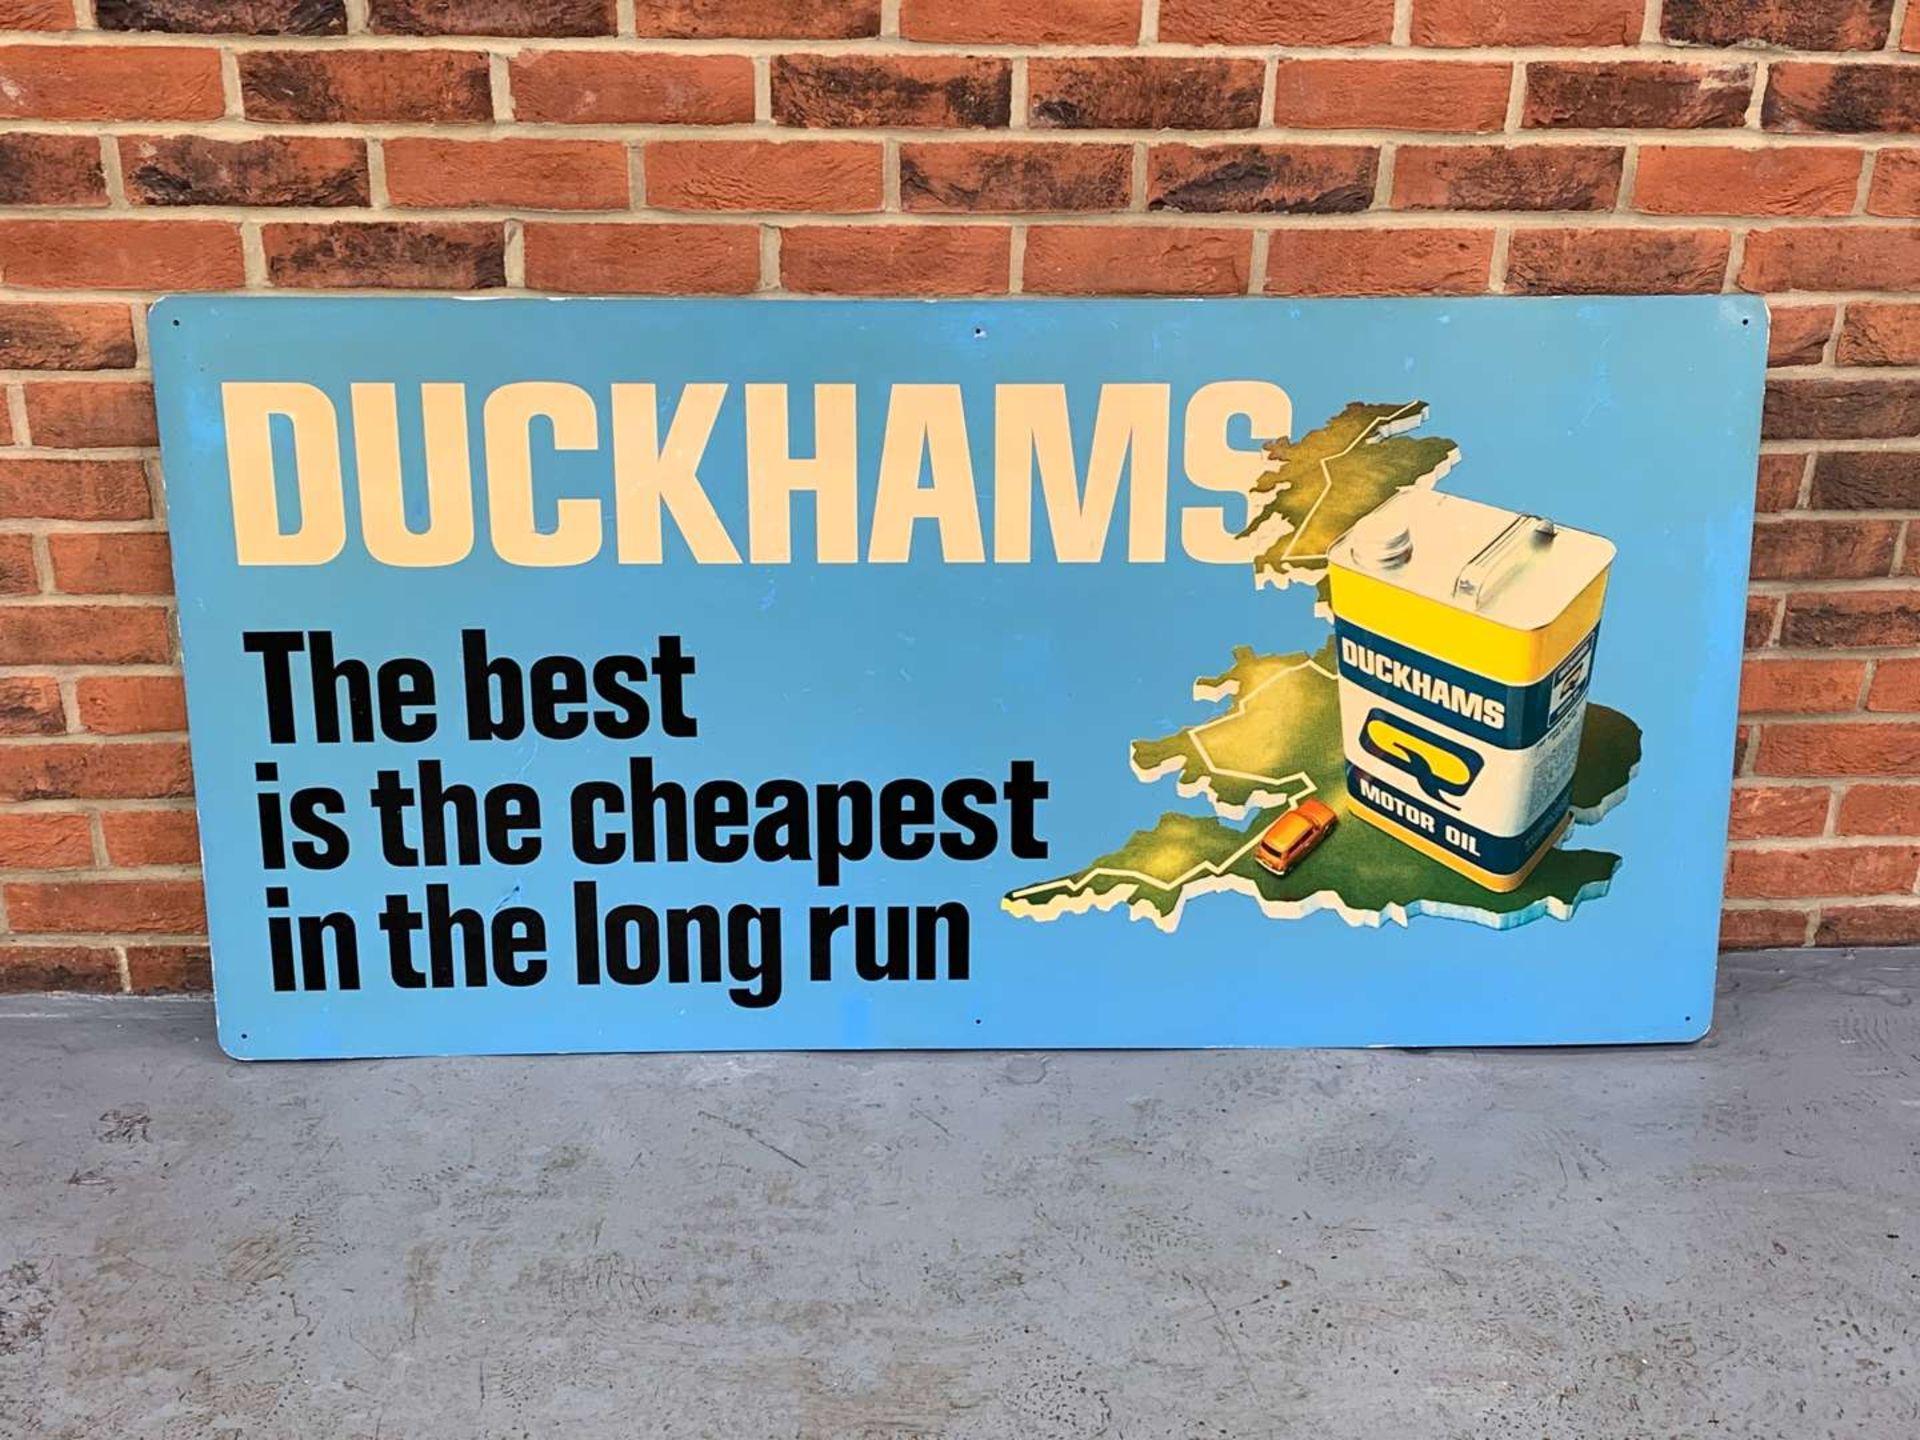 &nbsp;An Original Large Aluminium Duckhams “The Best is The Cheapest in The Long Run" Sign